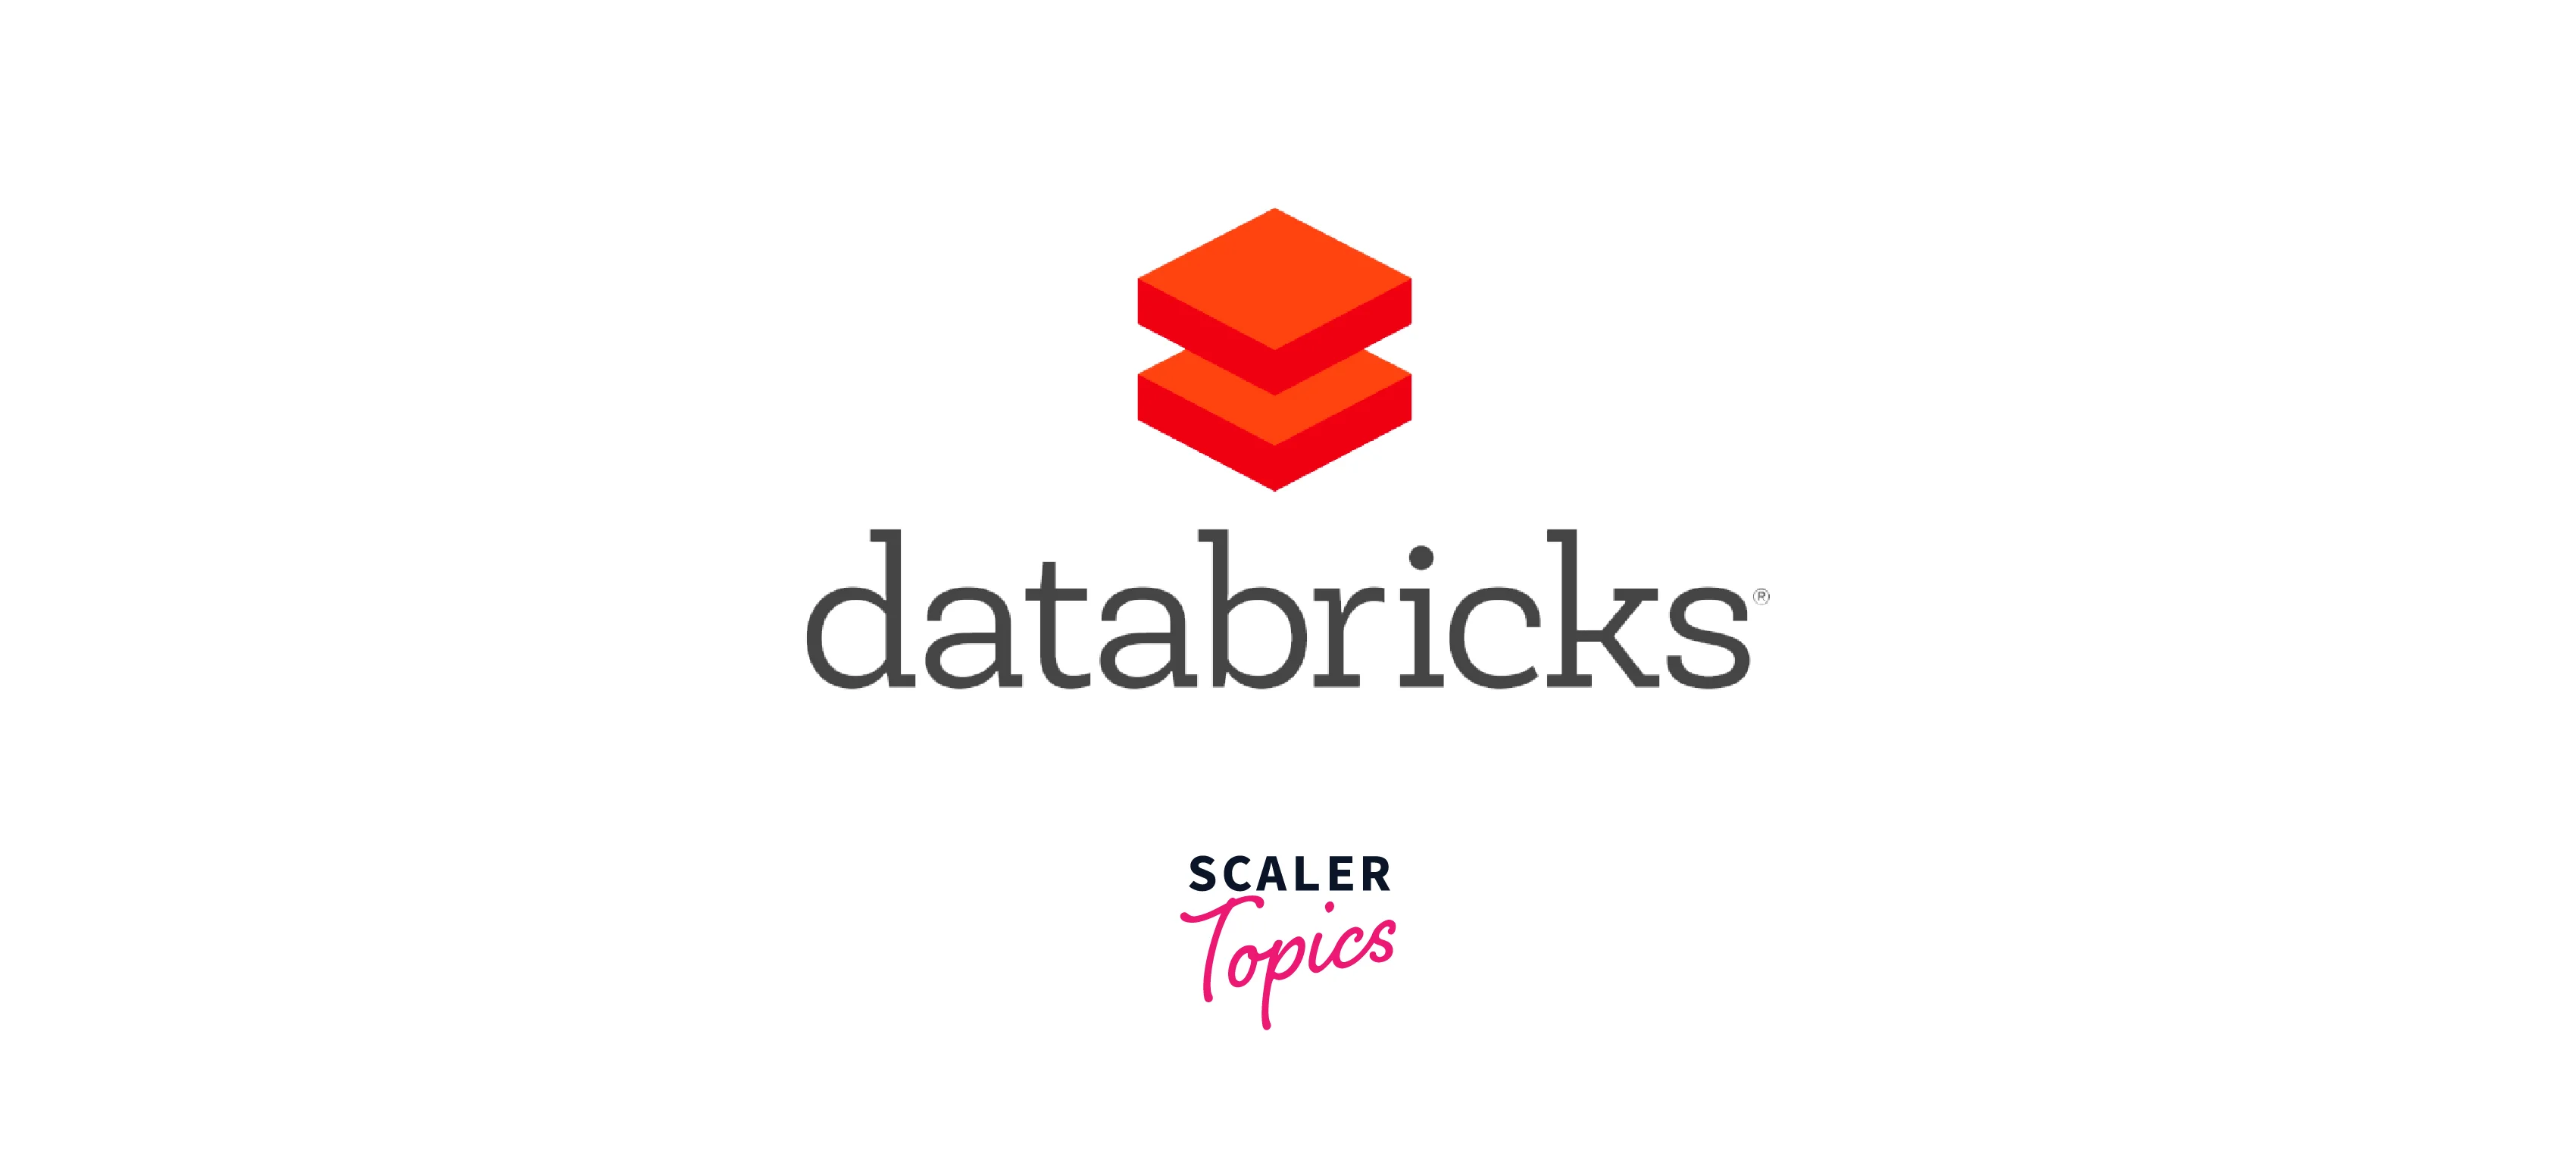 azure databricks logo